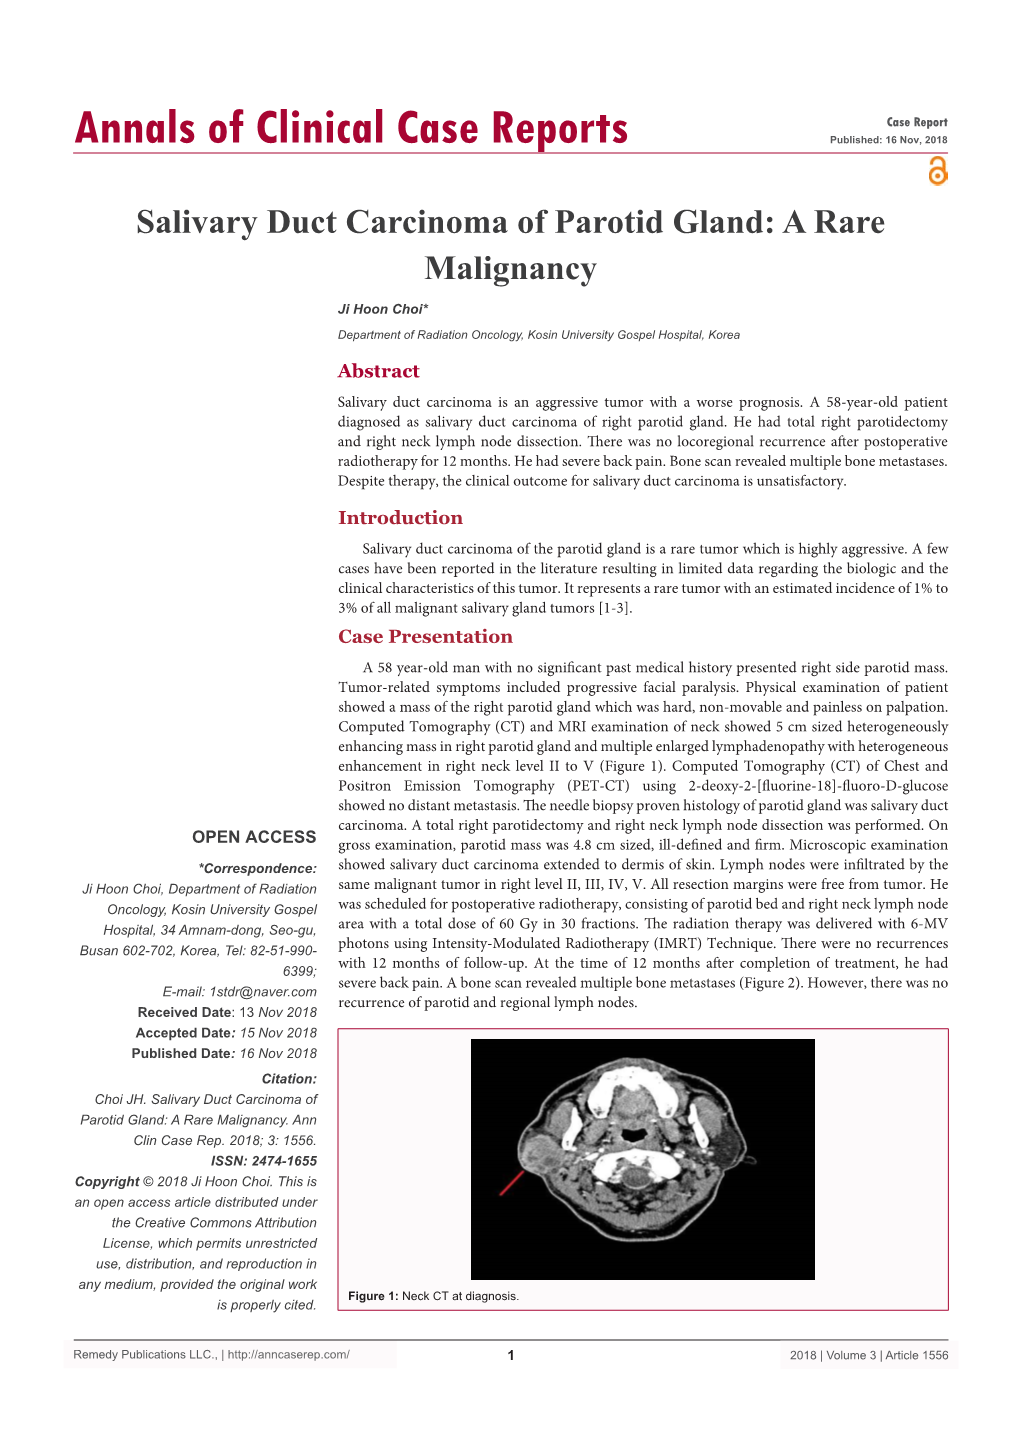 Salivary Duct Carcinoma of Parotid Gland: a Rare Malignancy